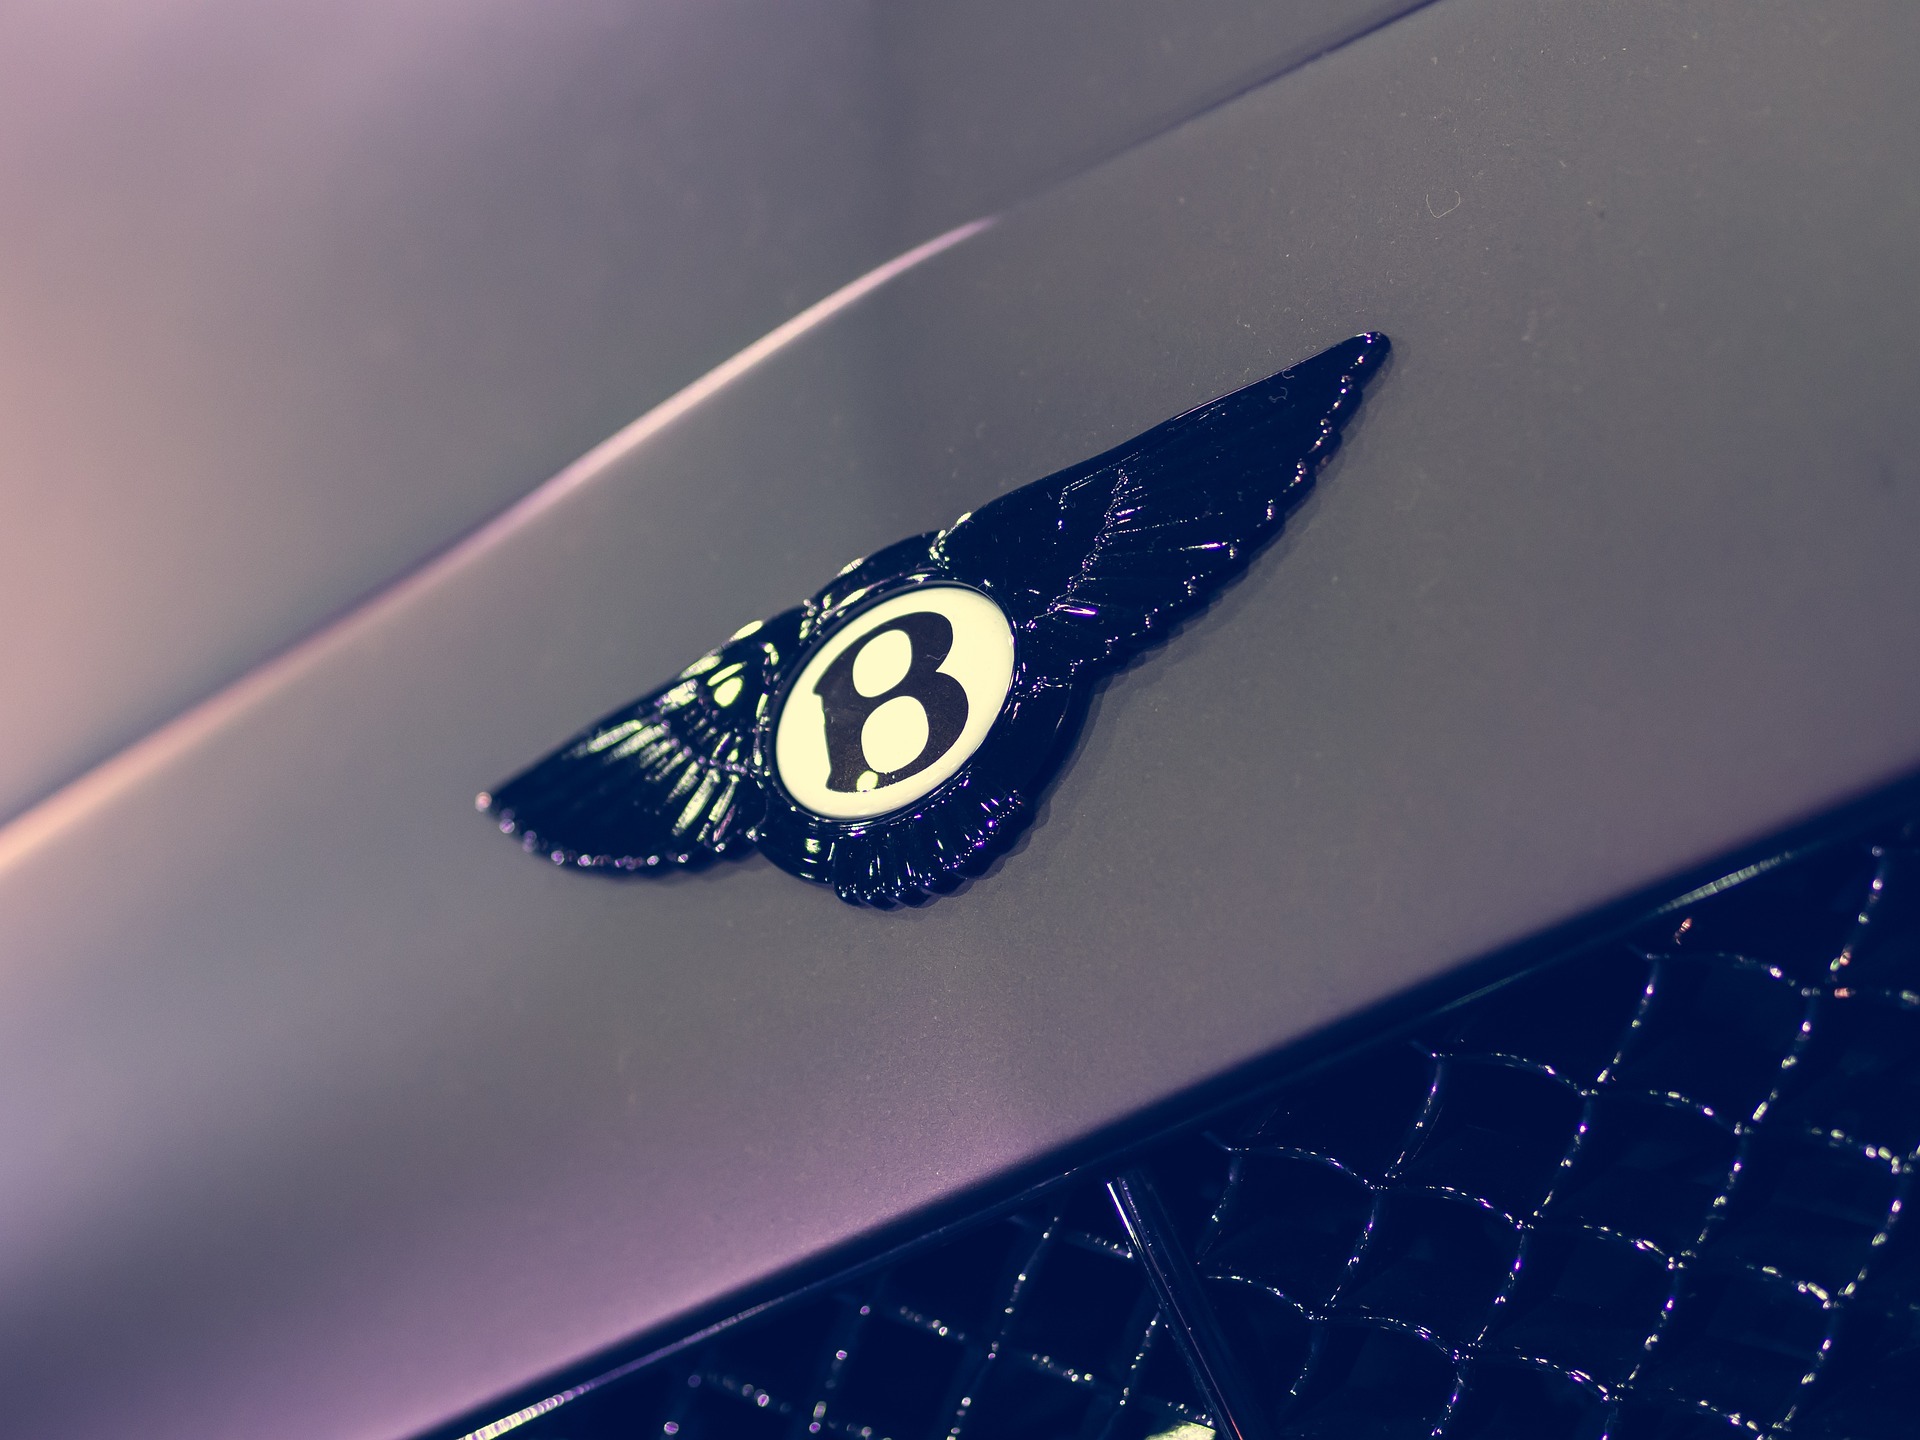 A Bentley logo on the hood of a vehicle